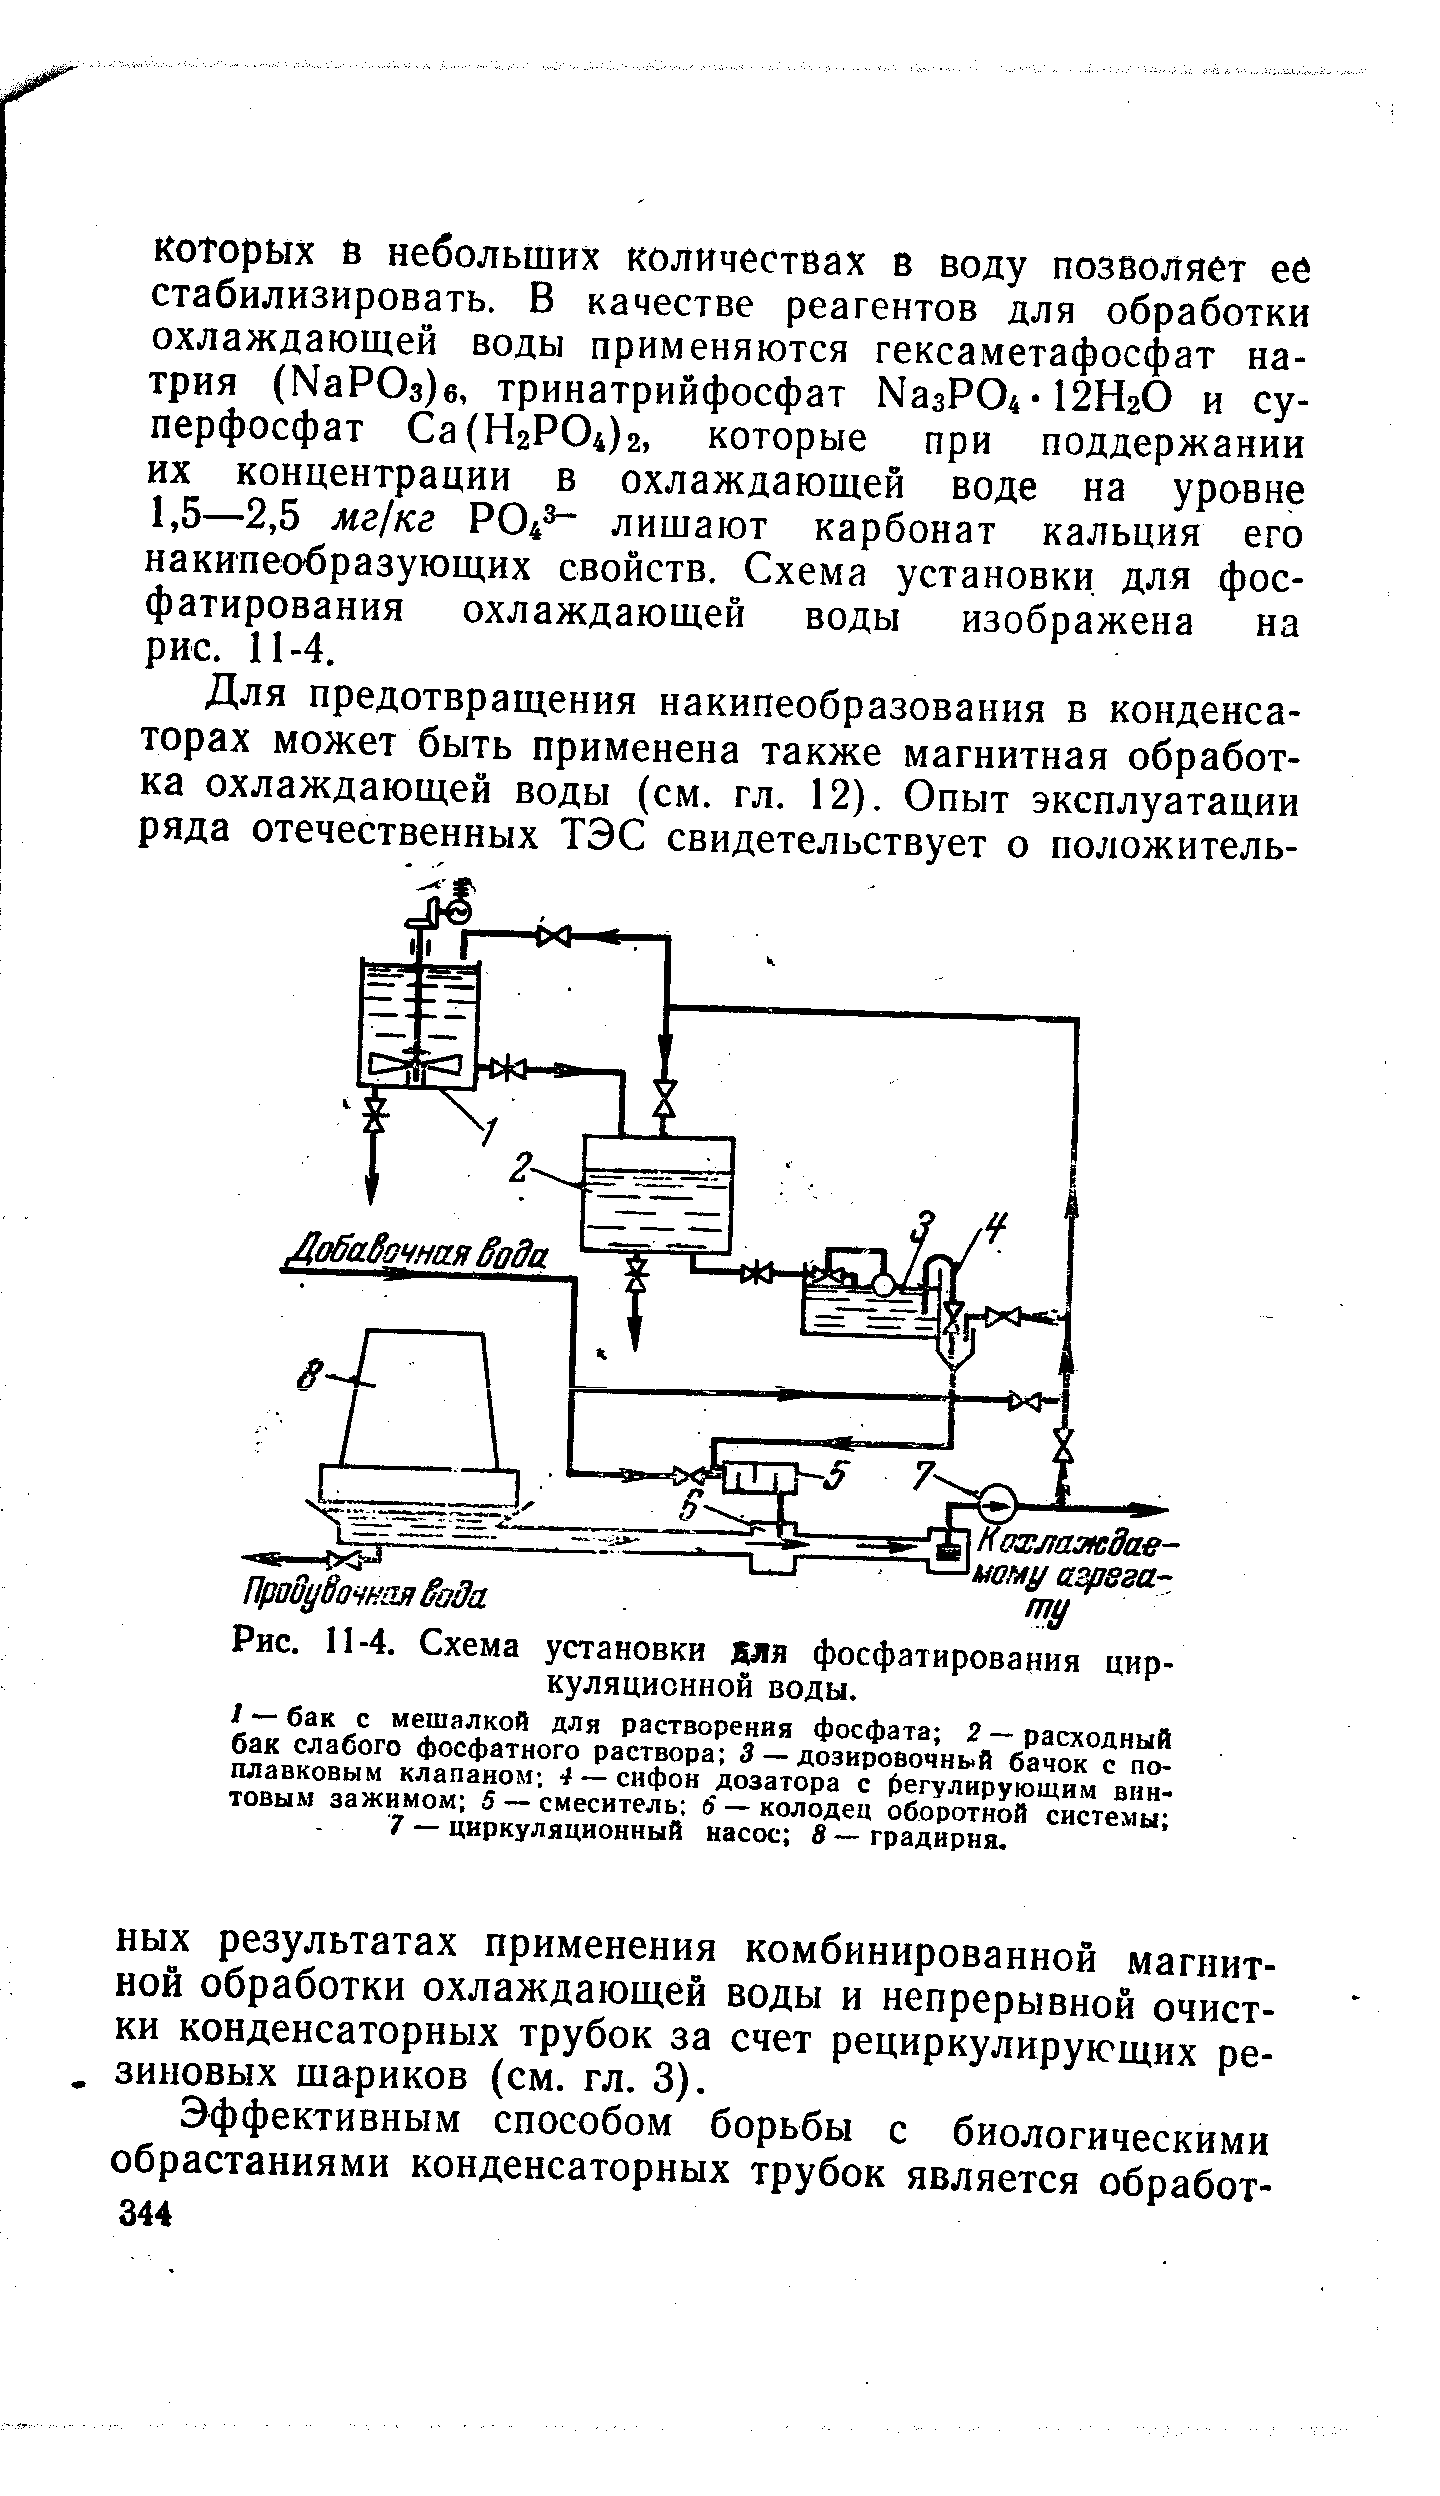 Рис. II-4, Схема установки Ялл фосфатирования циркуляционной воды.
